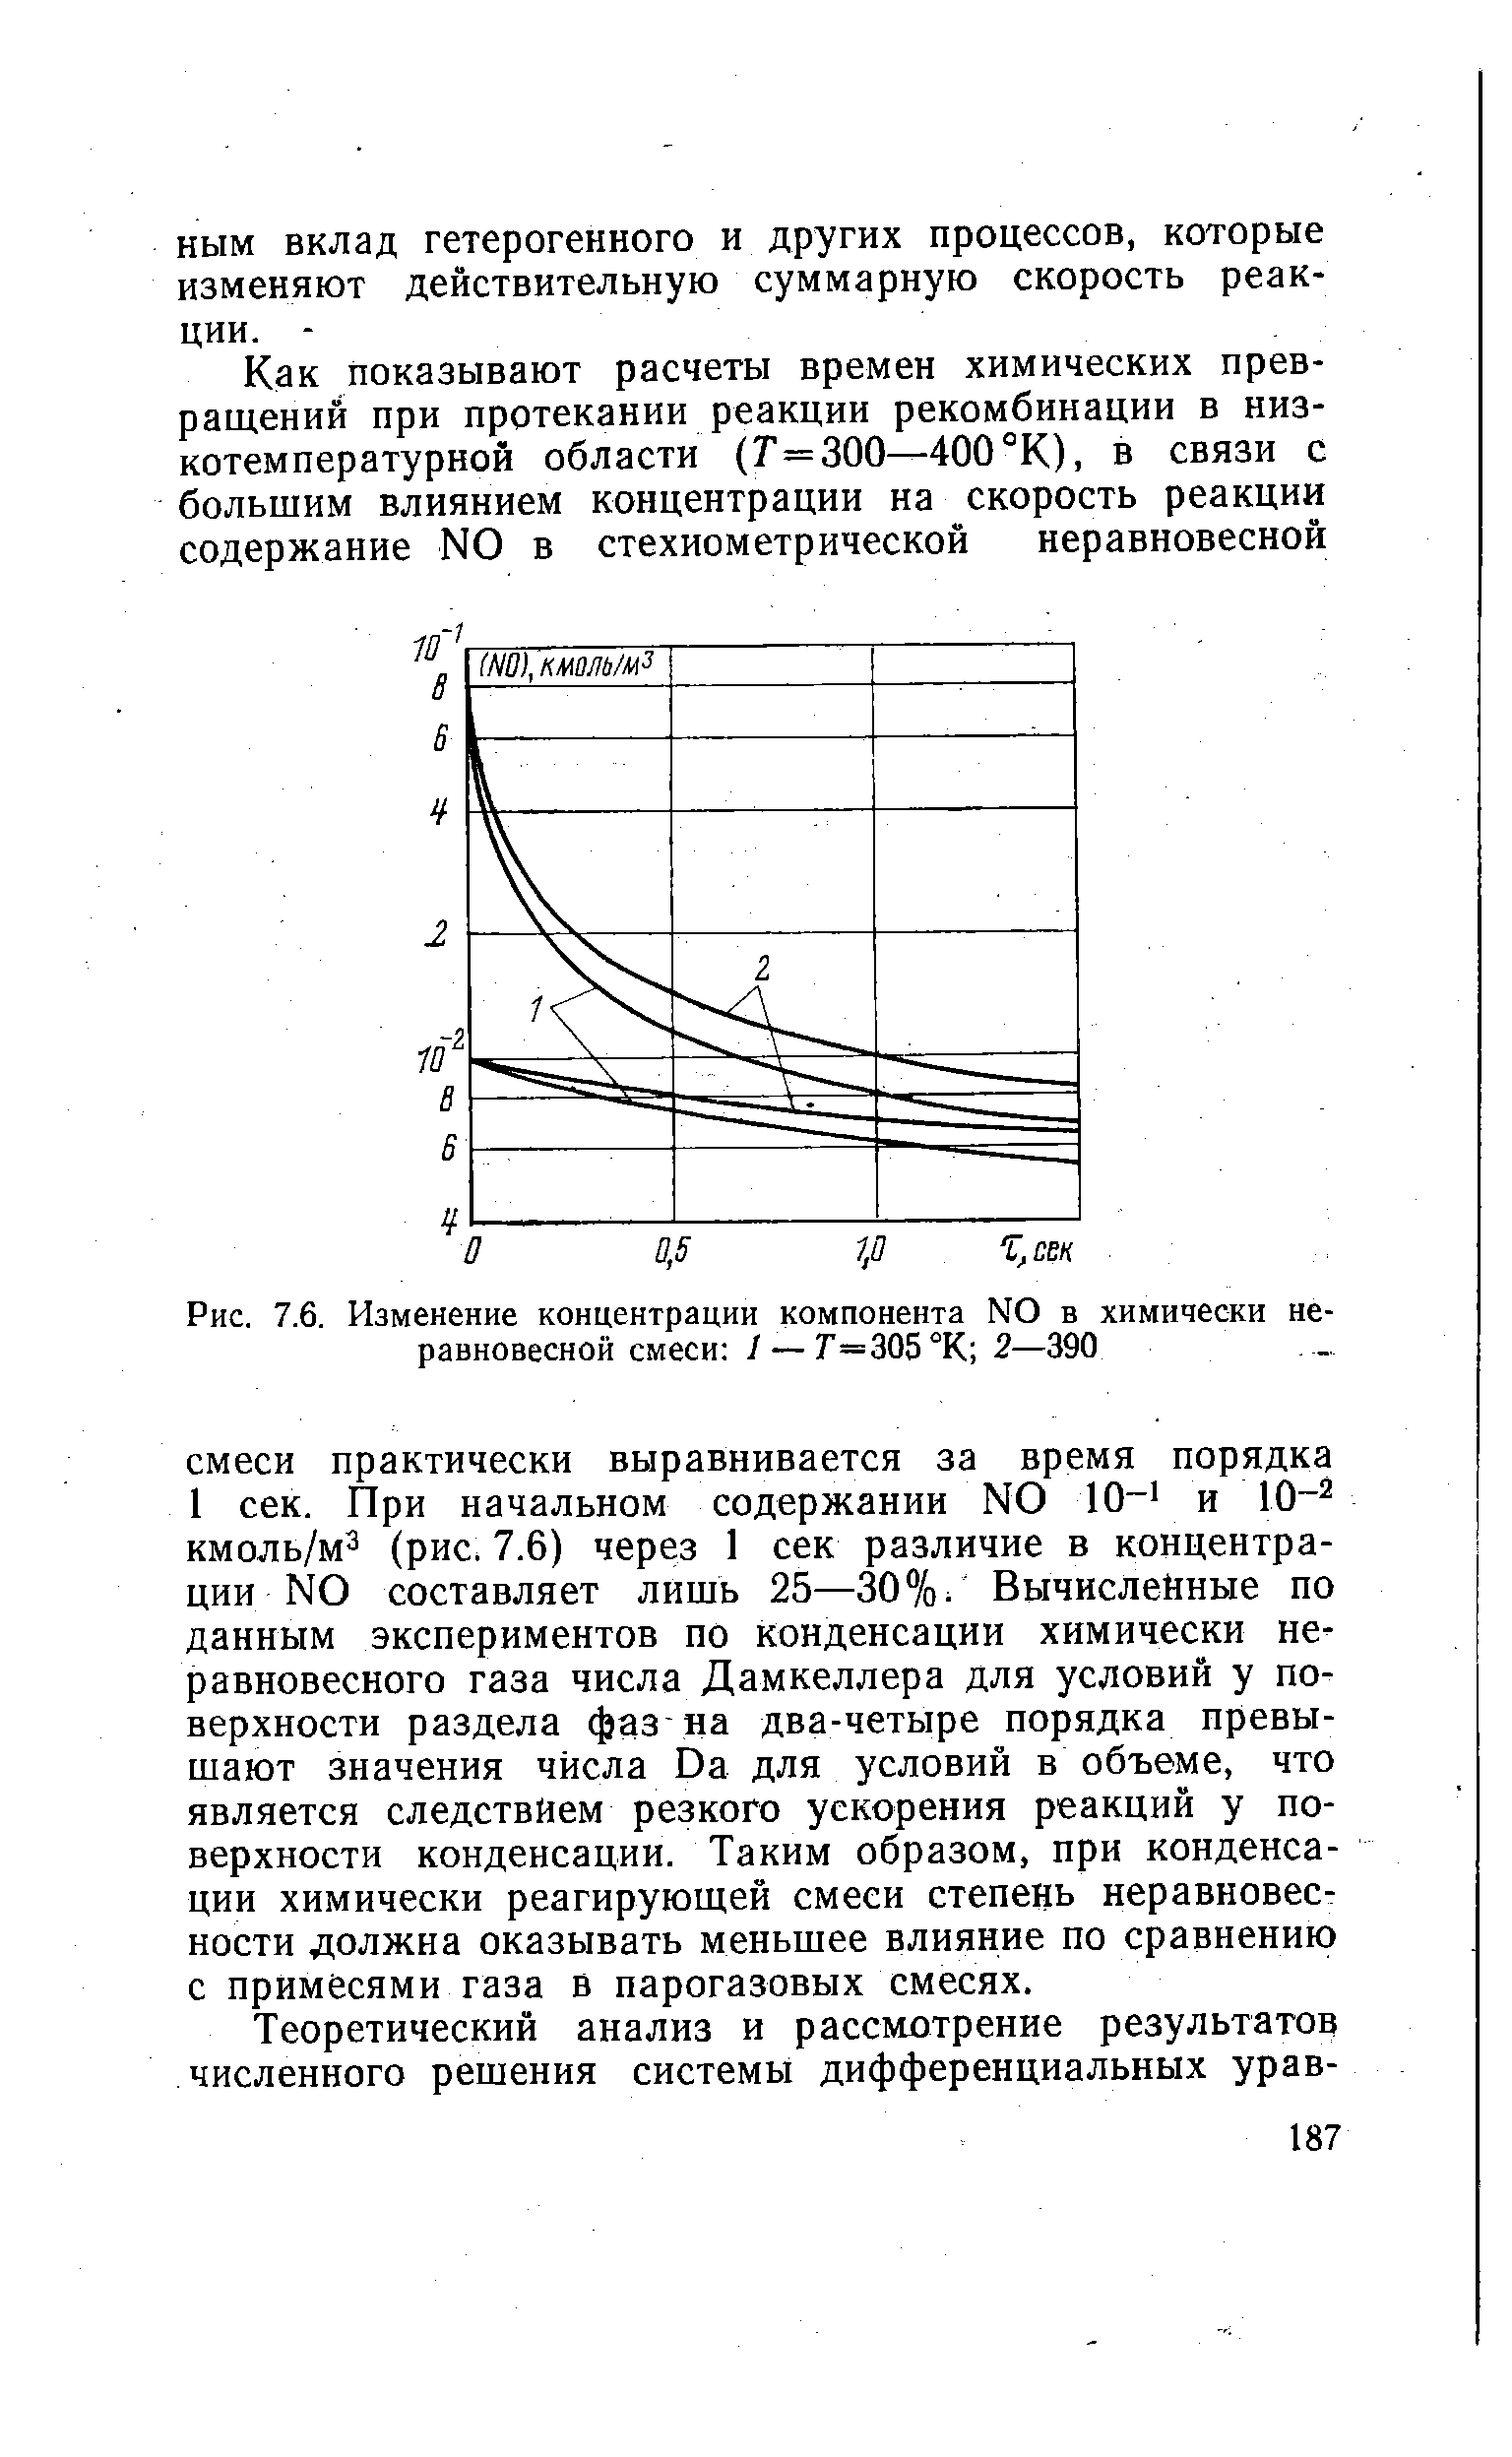 Рис. 7.6. Изменение концентрации компонента N0 в химически неравновесной смеси 7—Г=305°К 2—390
